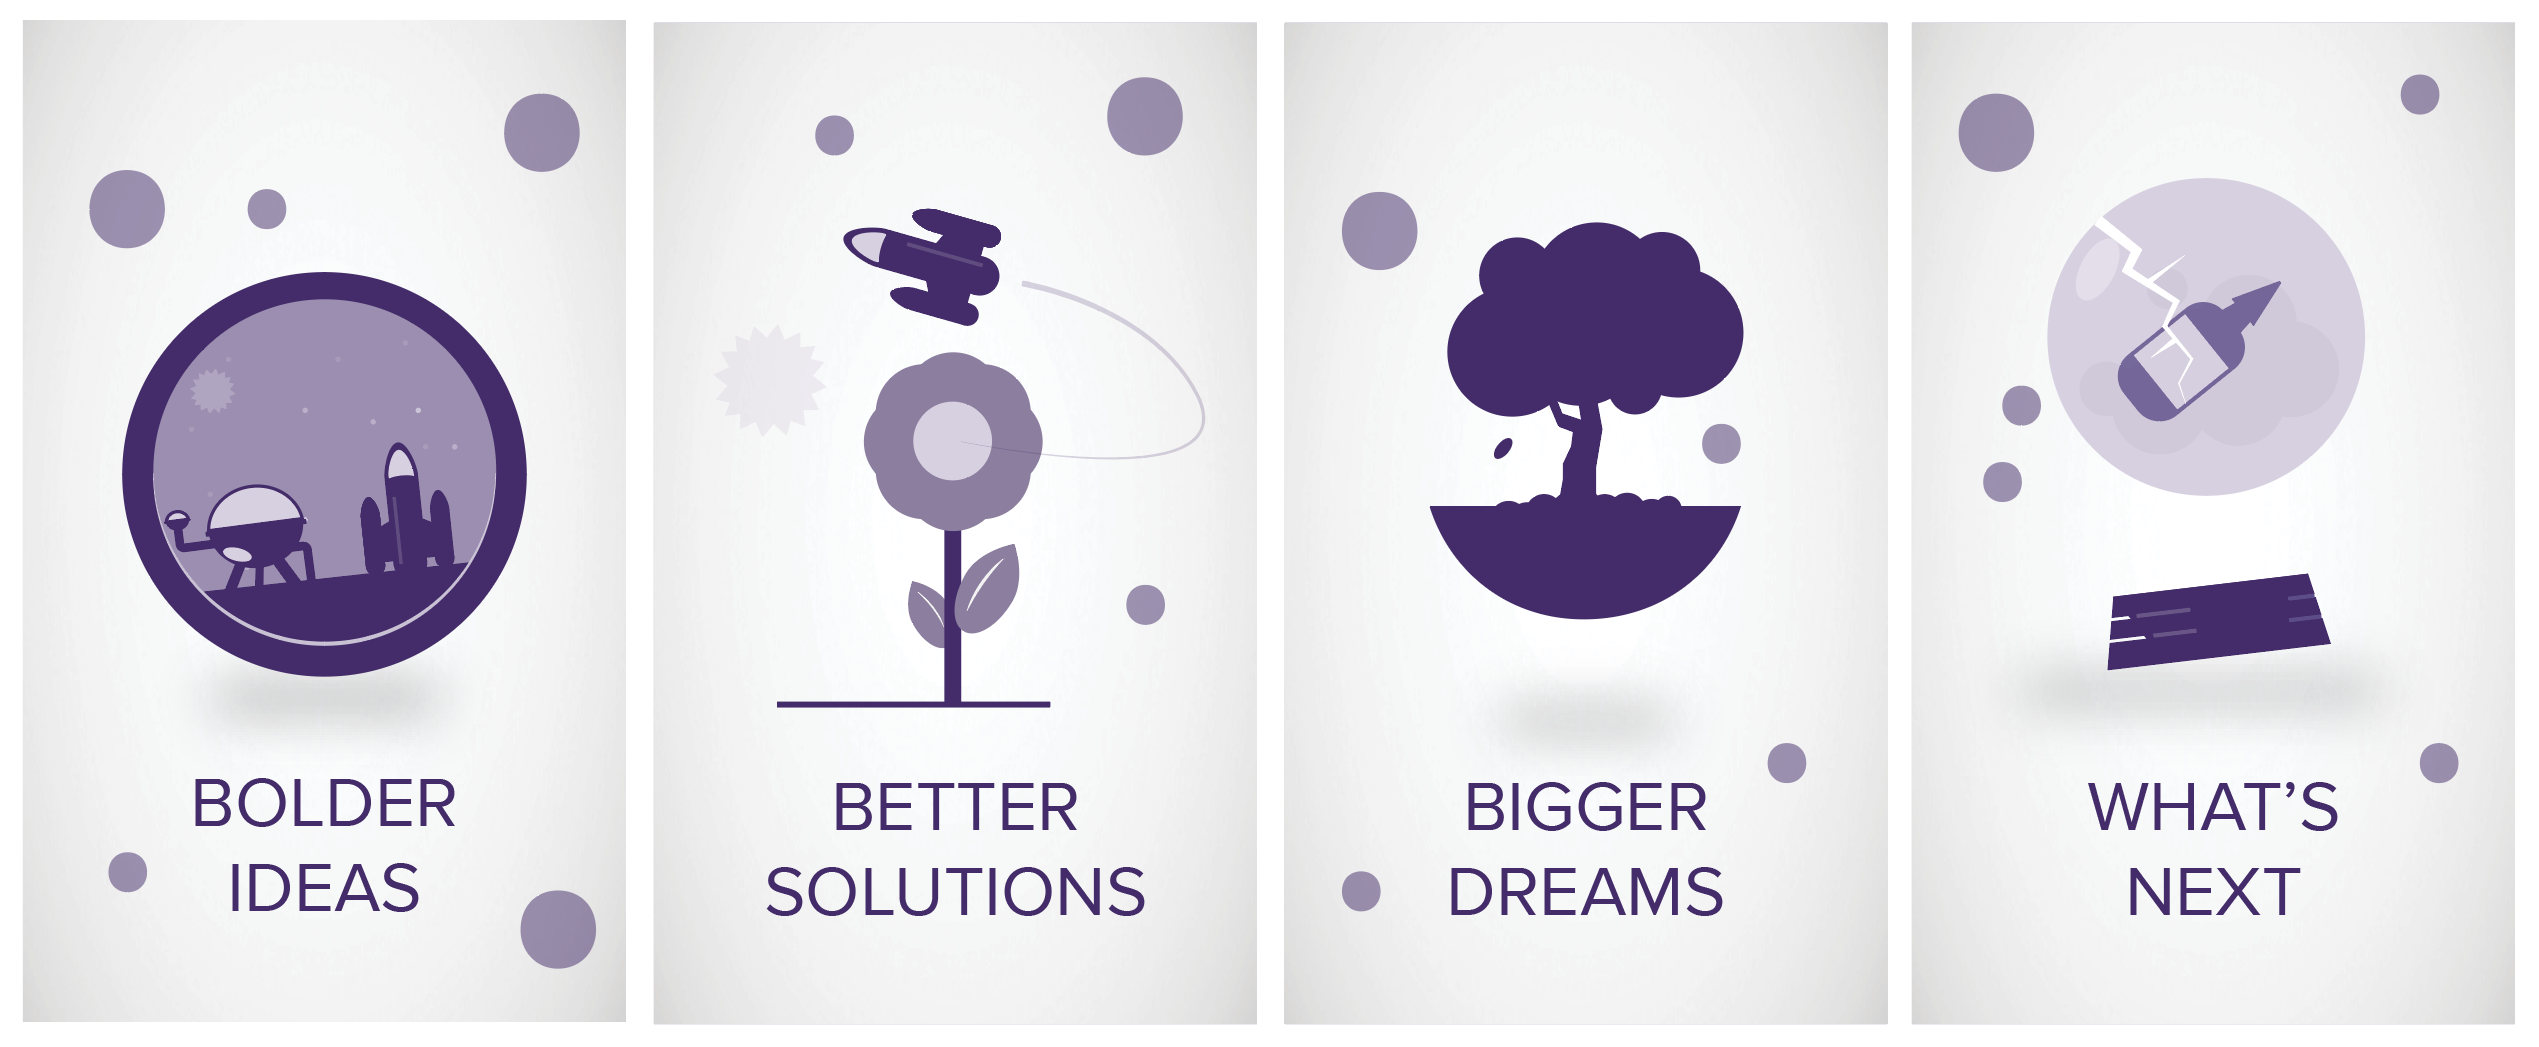 Bolder ideas Better solutions Bigger dreams What's next